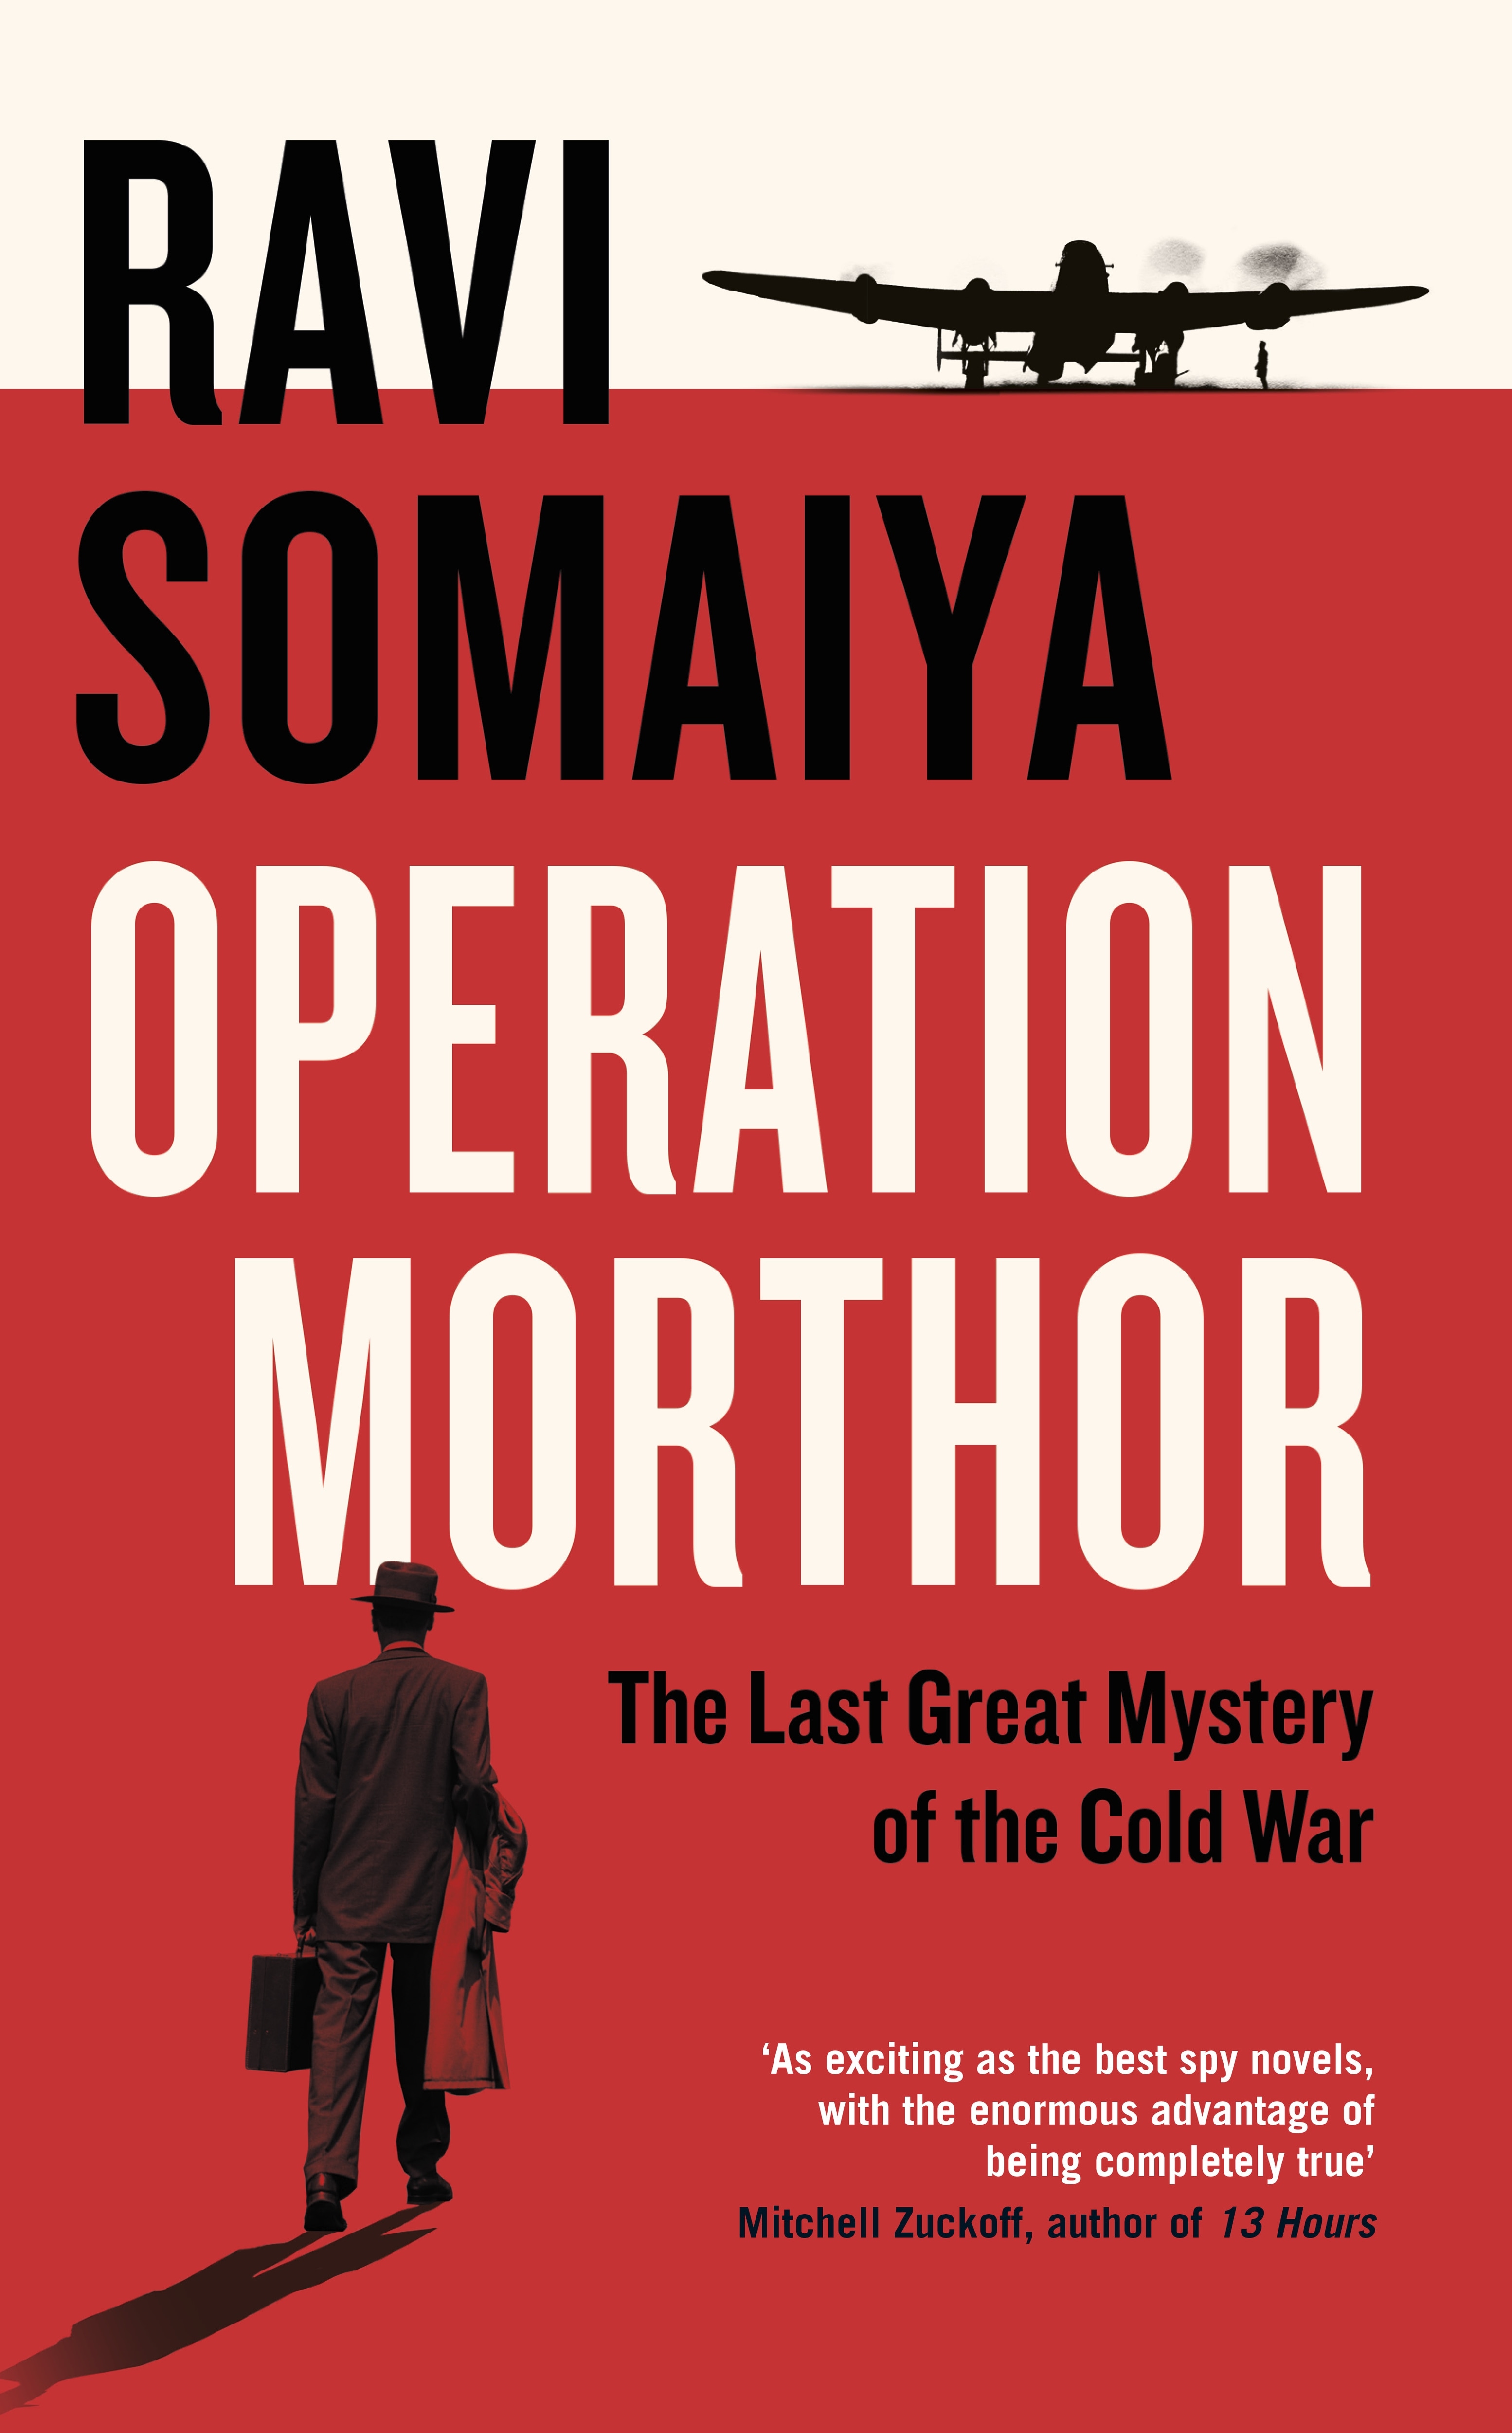 Book “Operation Morthor” by Ravi Somaiya — August 6, 2020